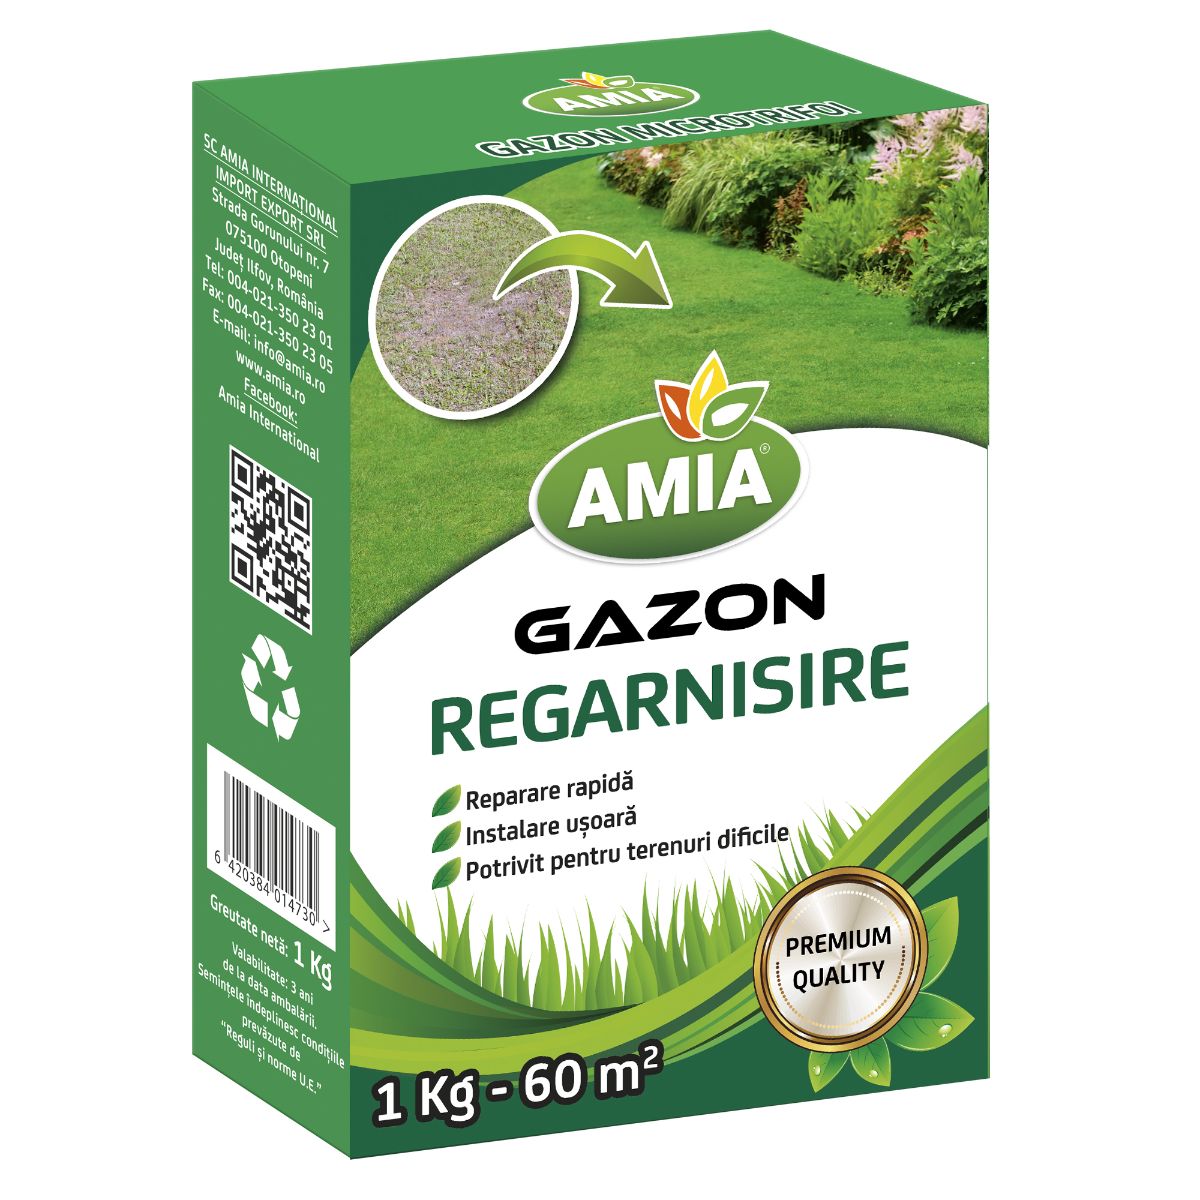 Seminte gazon - Seminte Gazon REGARNISIRE AMIA 1 Kg, hectarul.ro